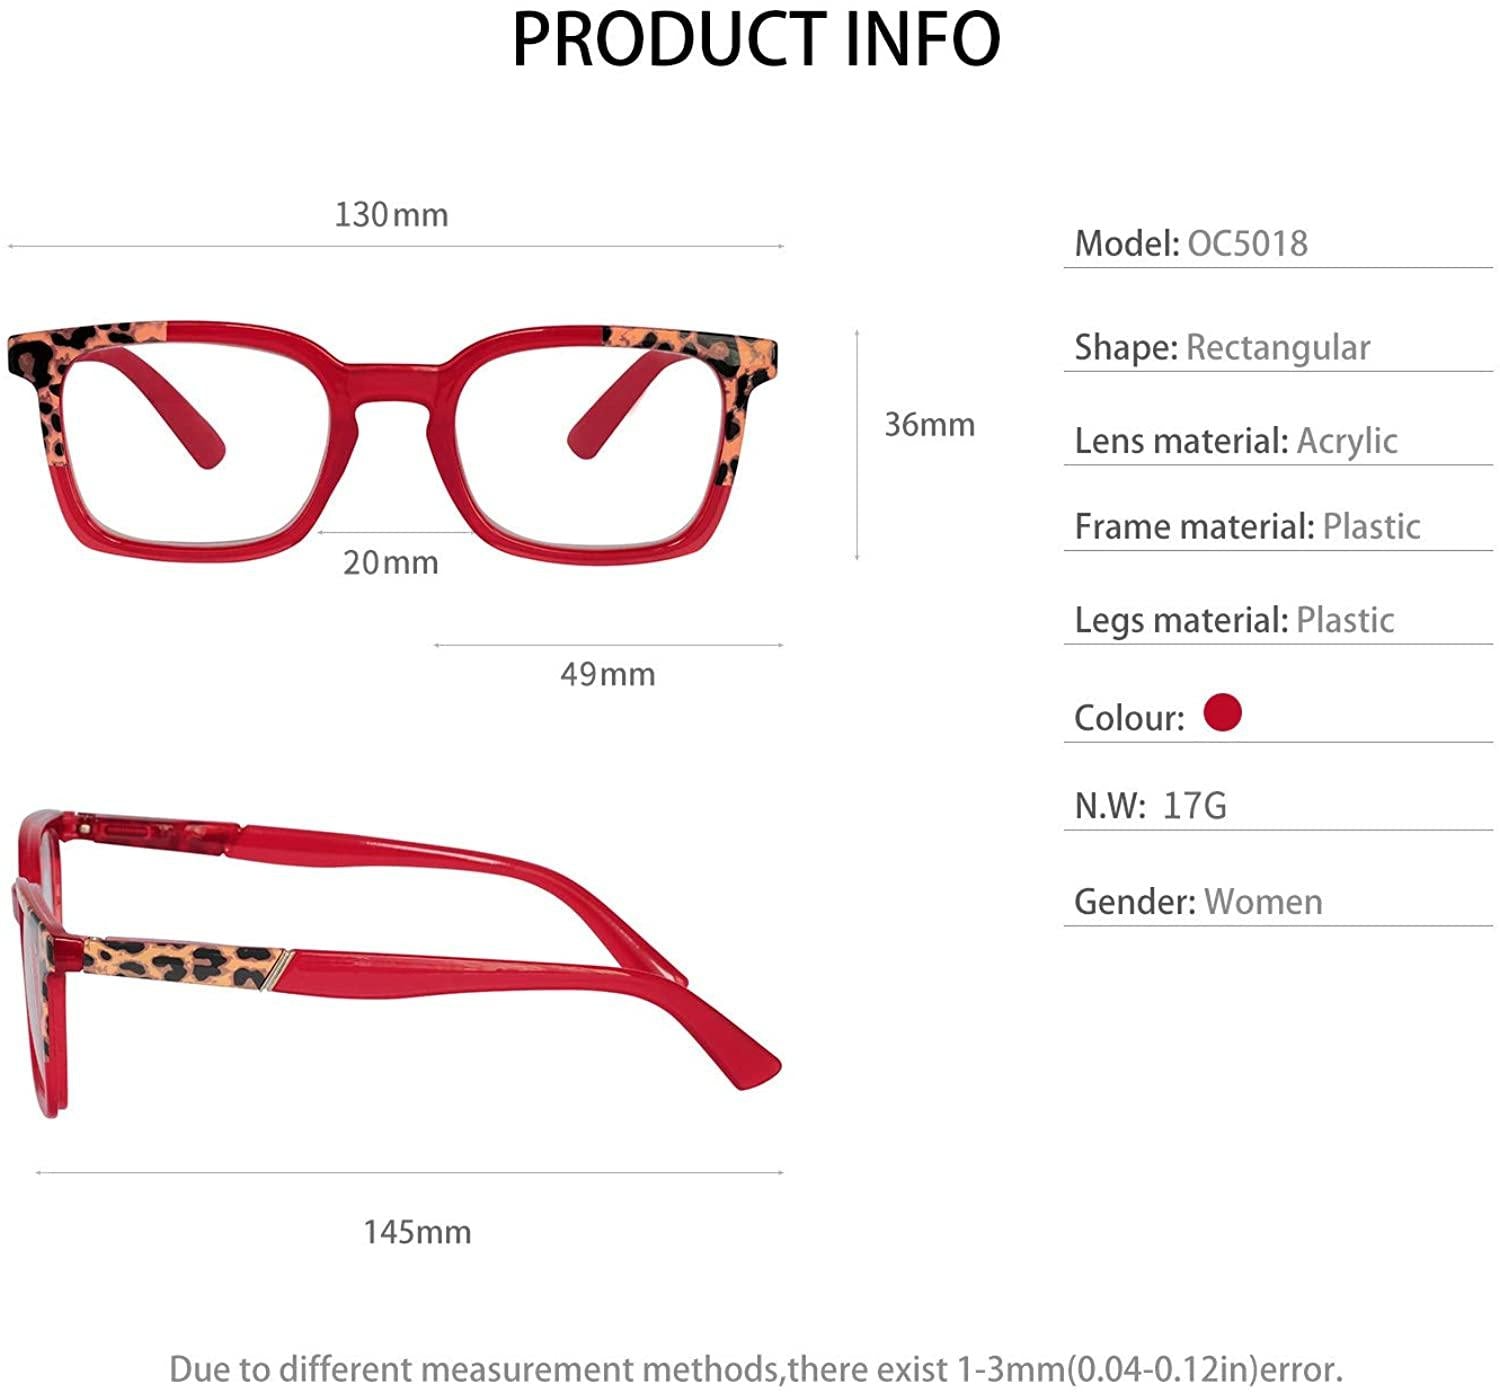 OCCI CHIARI Fashion Reading Glasses Reader Eyewear with Spring Hinge - Occichiari 